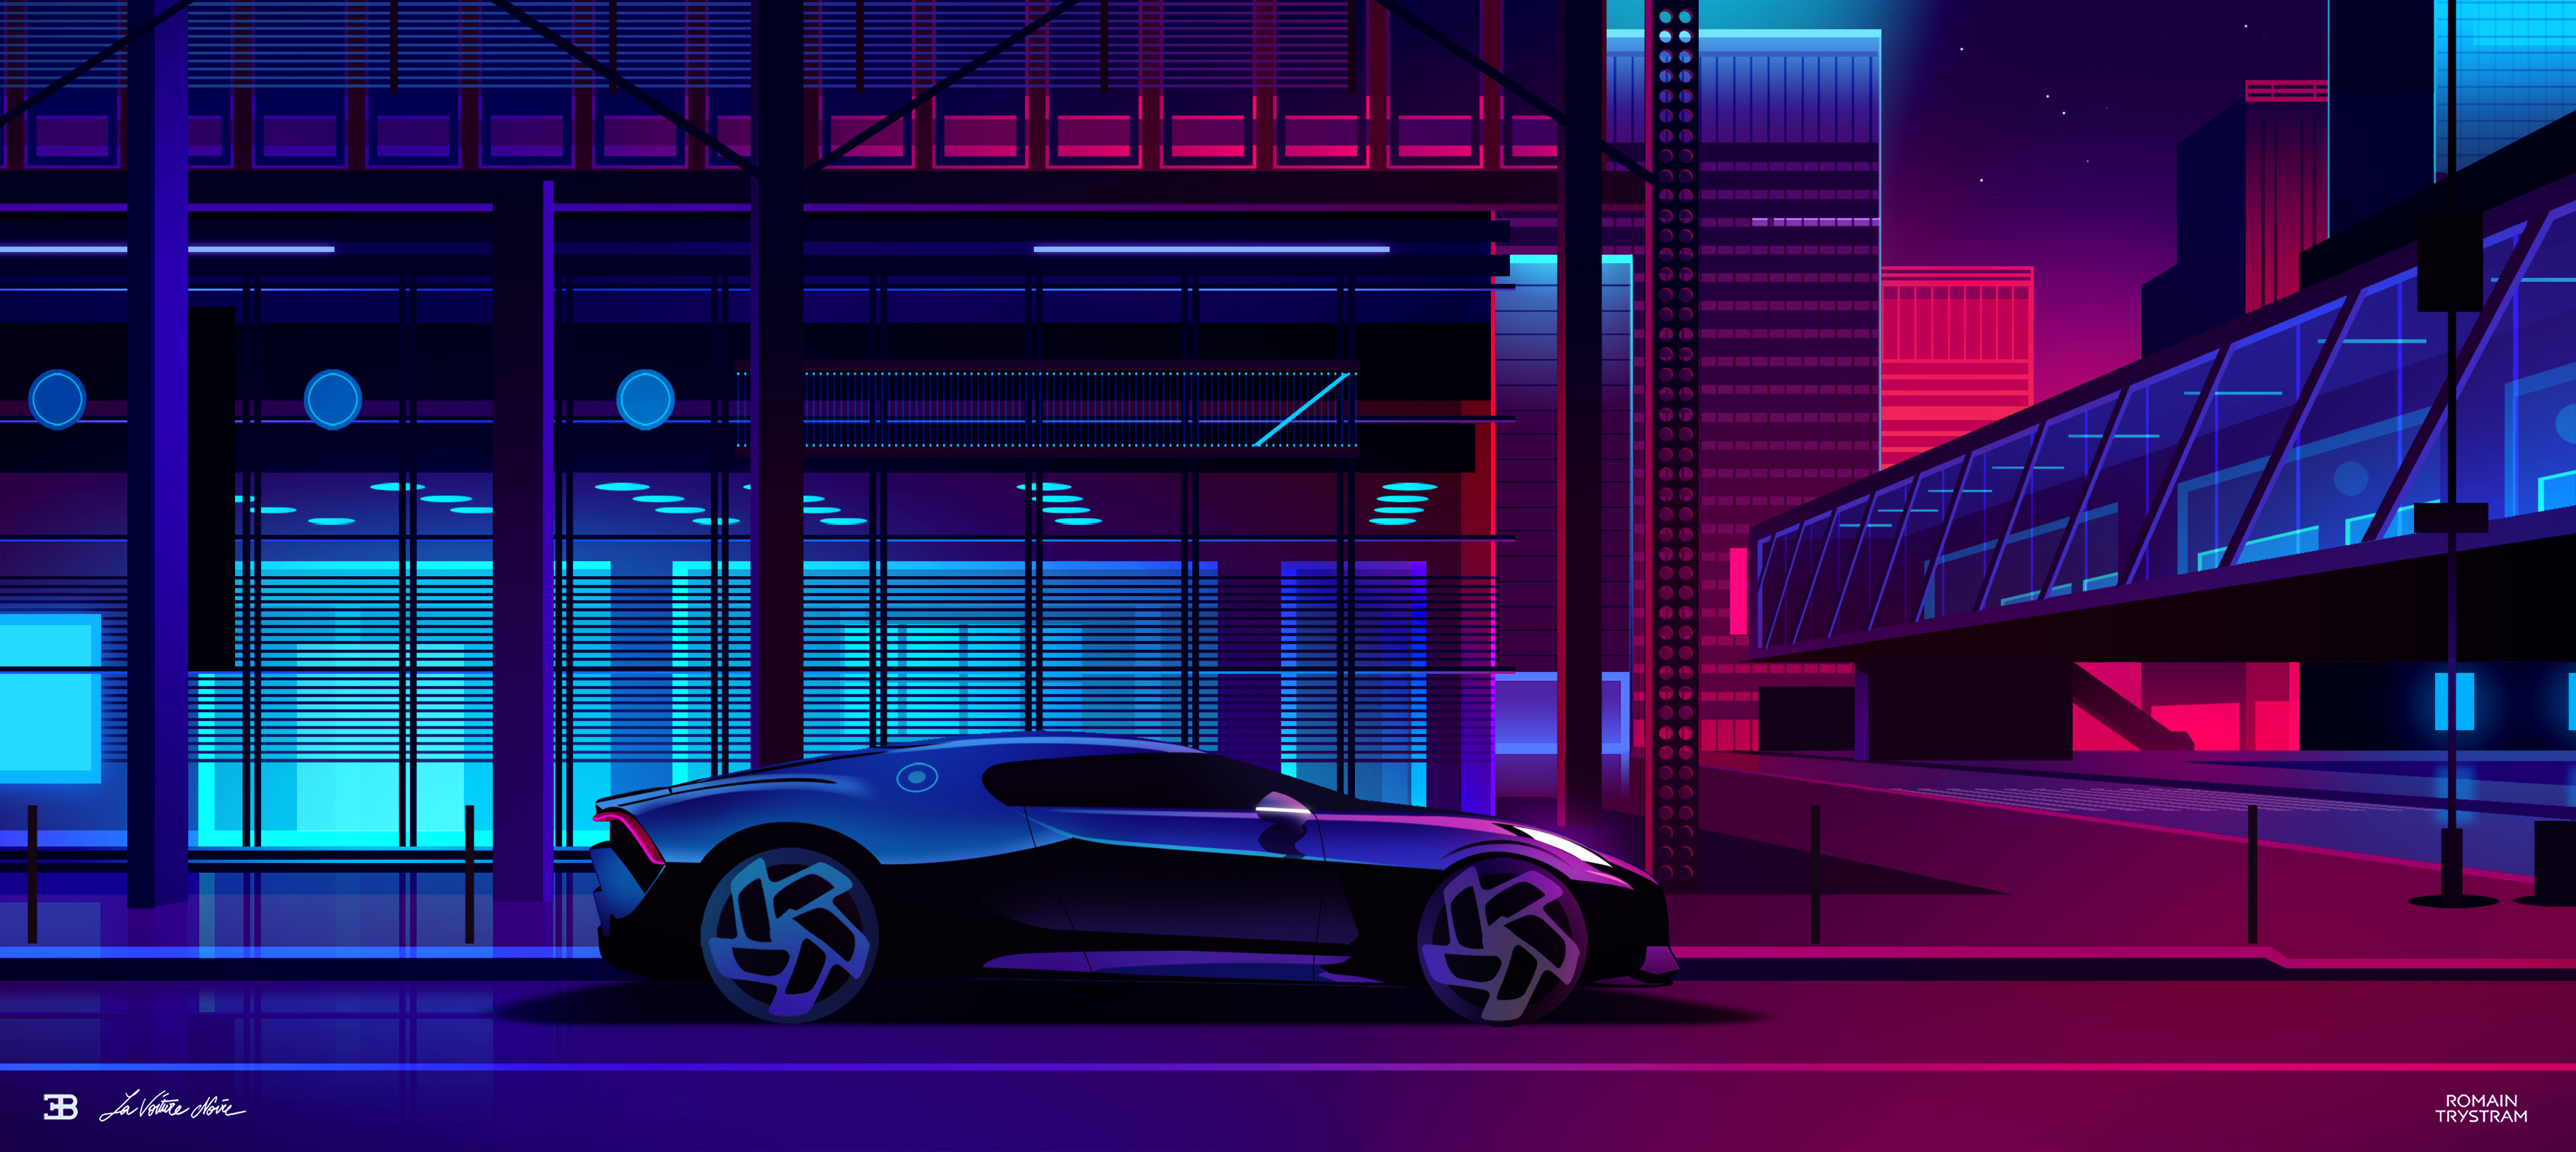 Bugatti Noire Neon Art, HD Cars, 4k Wallpaper, Image, Background, Photo and Picture